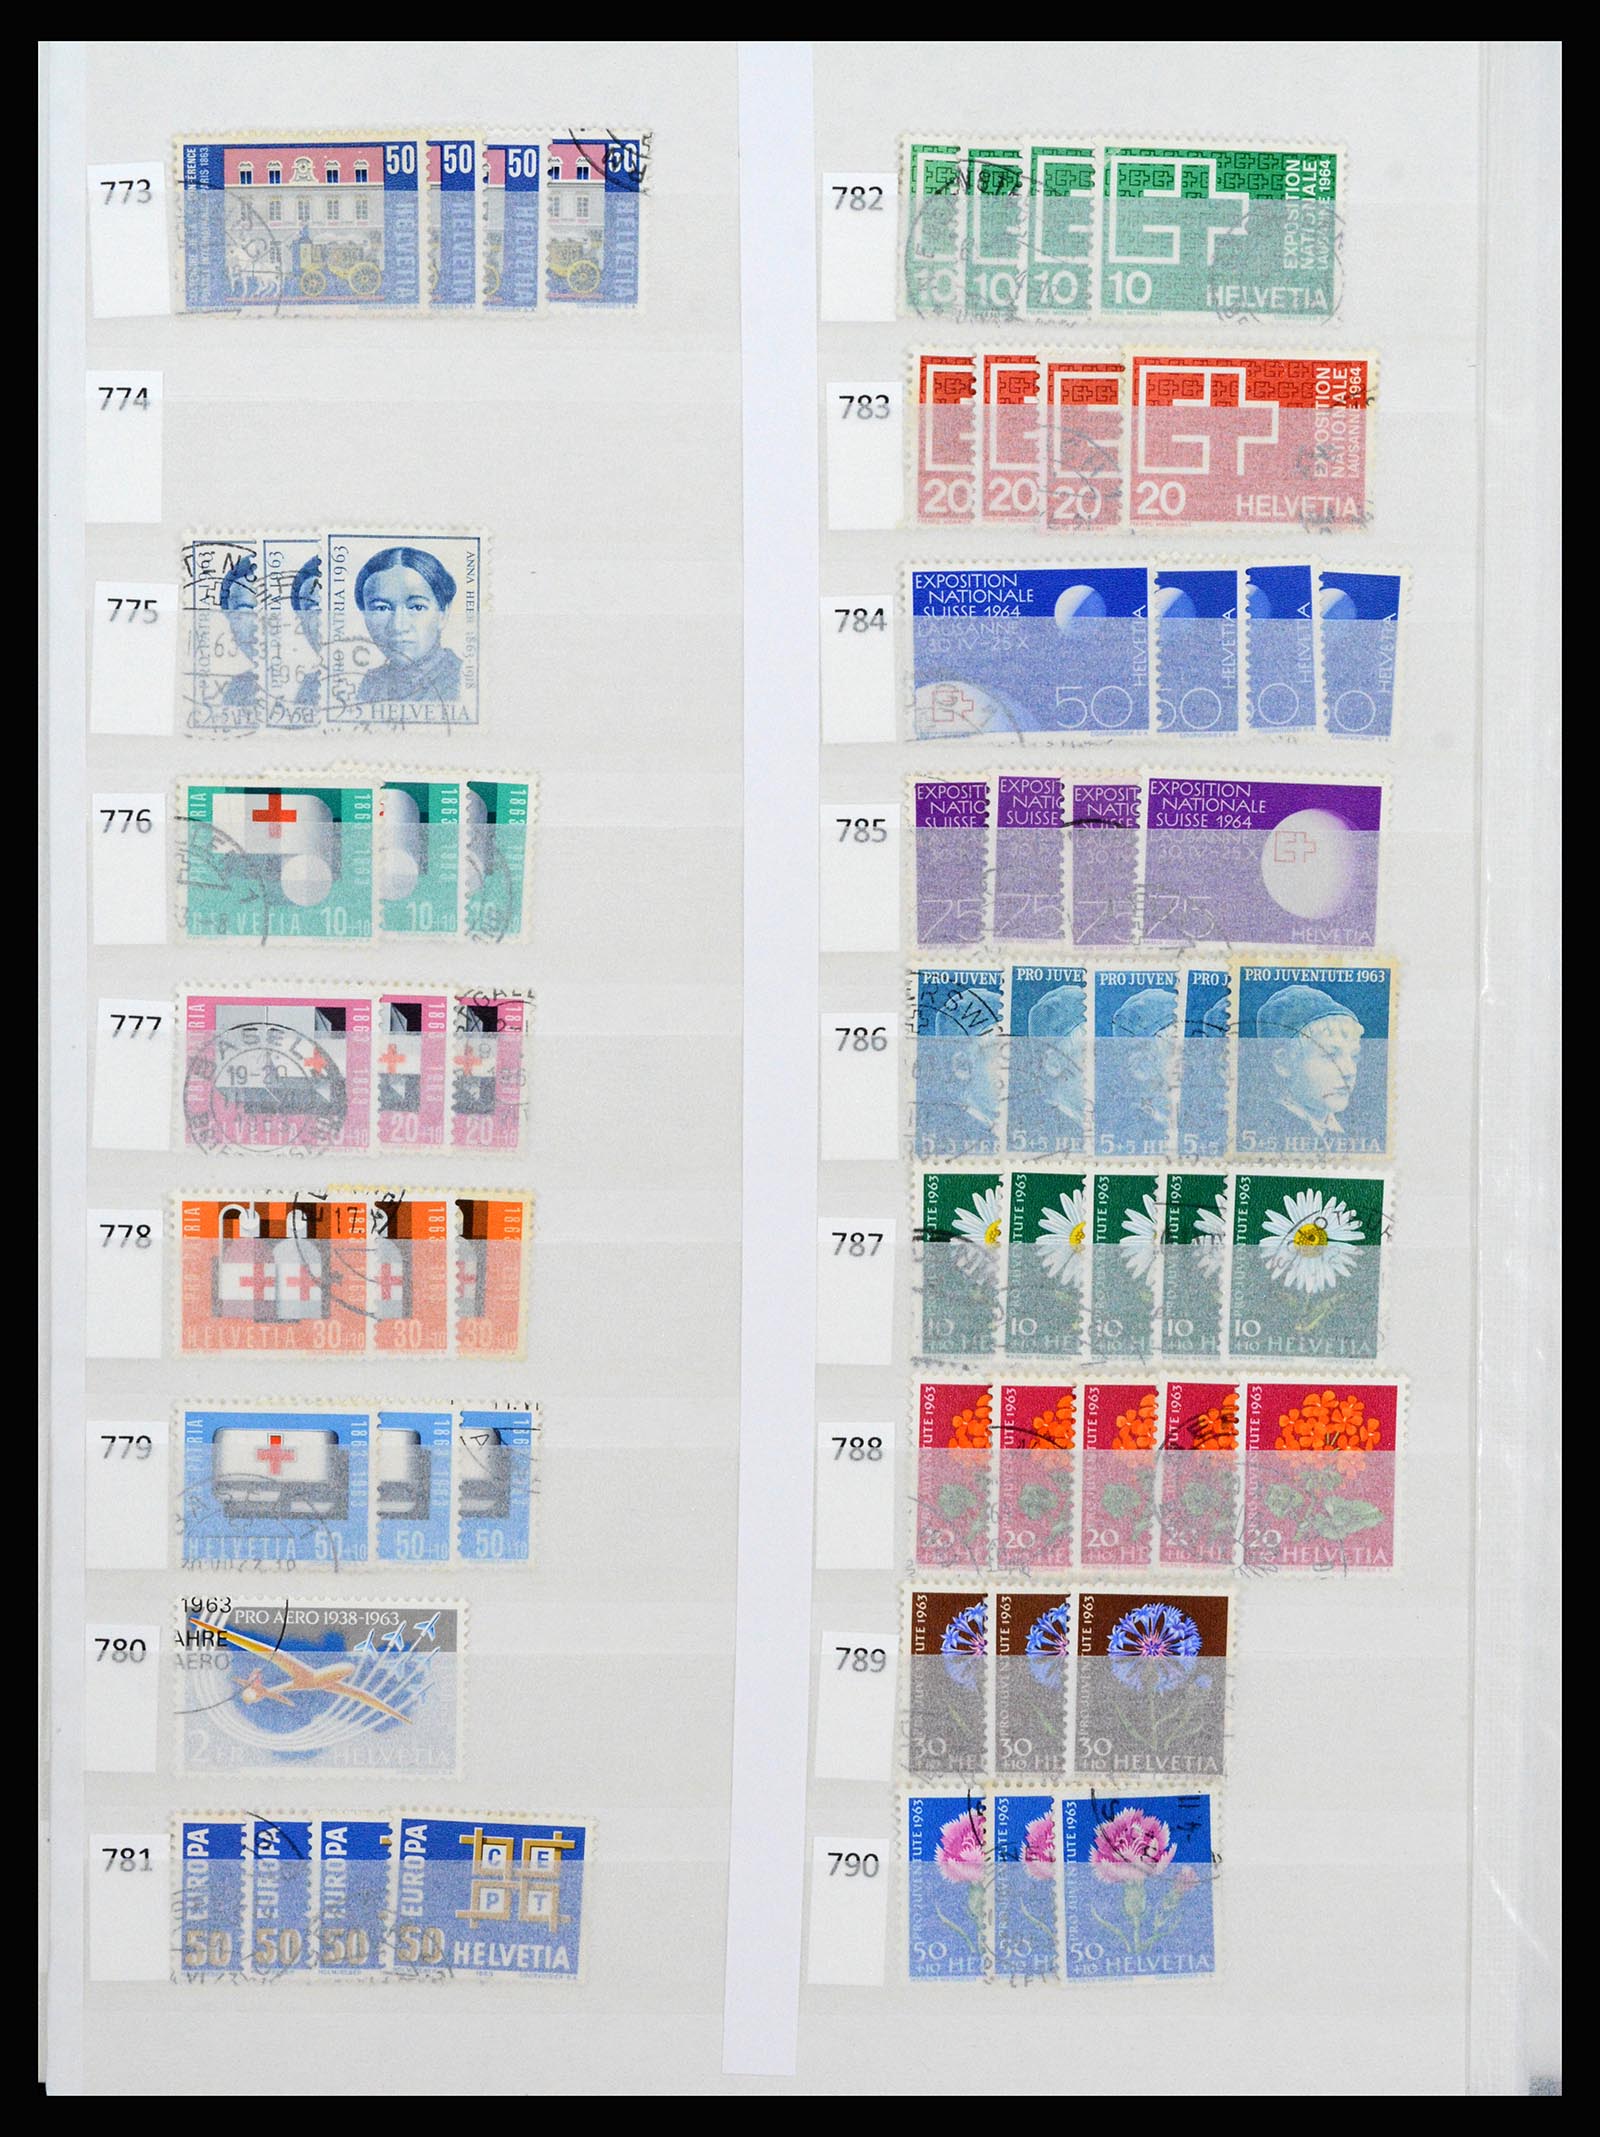 37252 041 - Stamp collection 37252 Switzerland 1900-2011.